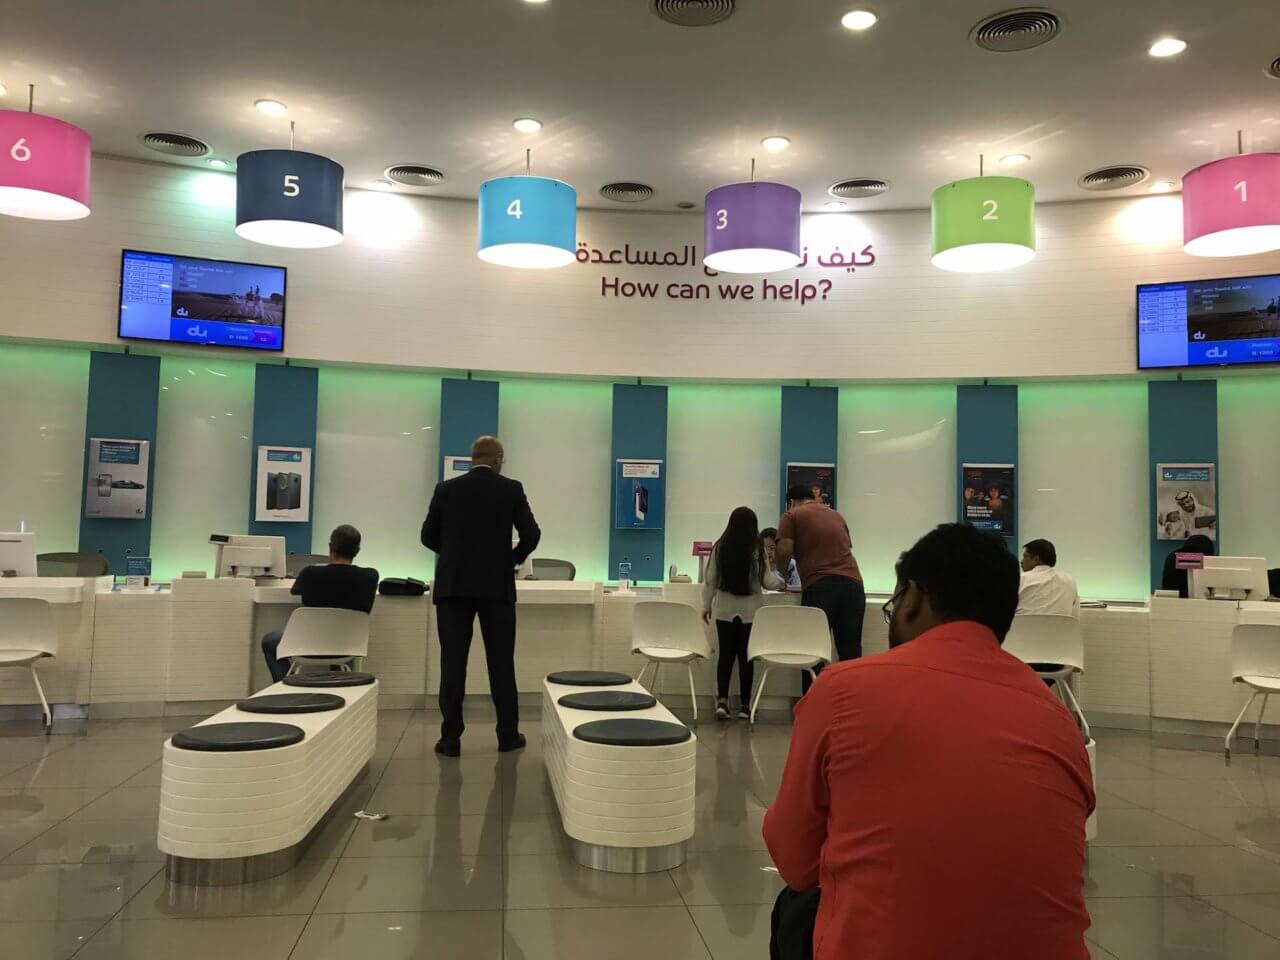 Dubai Free WiFi&Sim